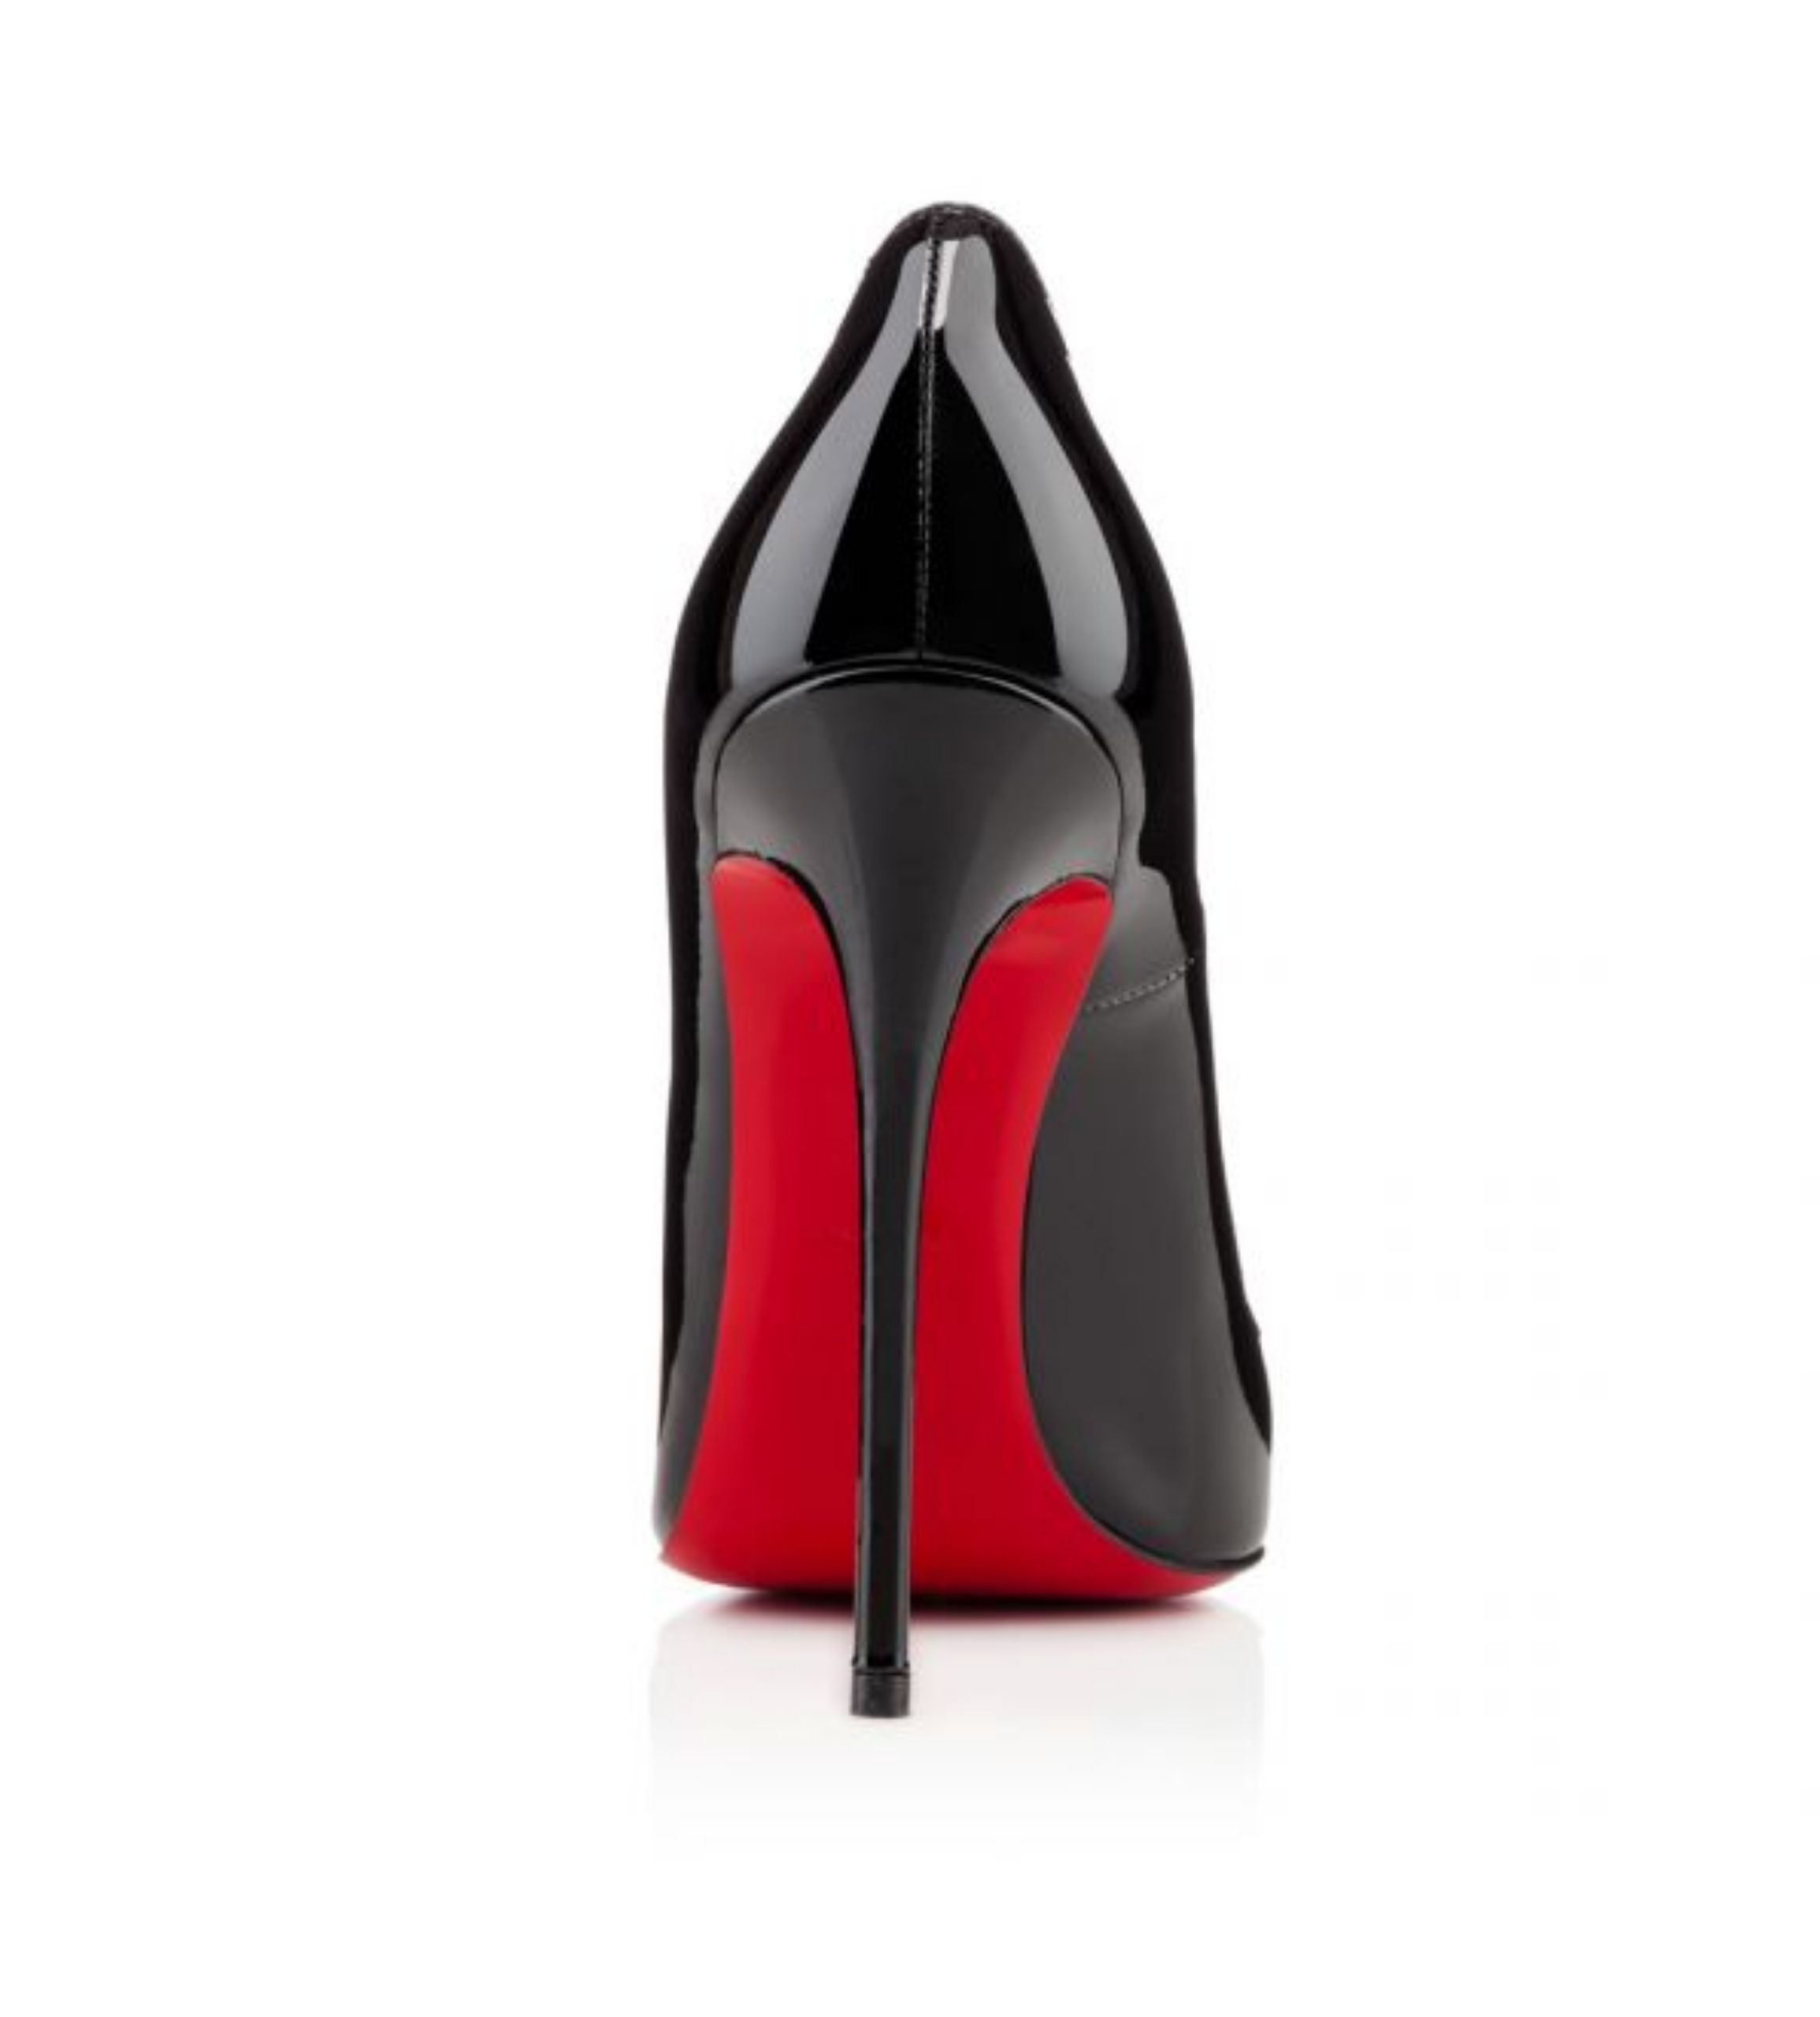 So Kate 120 Black Patent leather - Women Shoes - Christian Louboutin